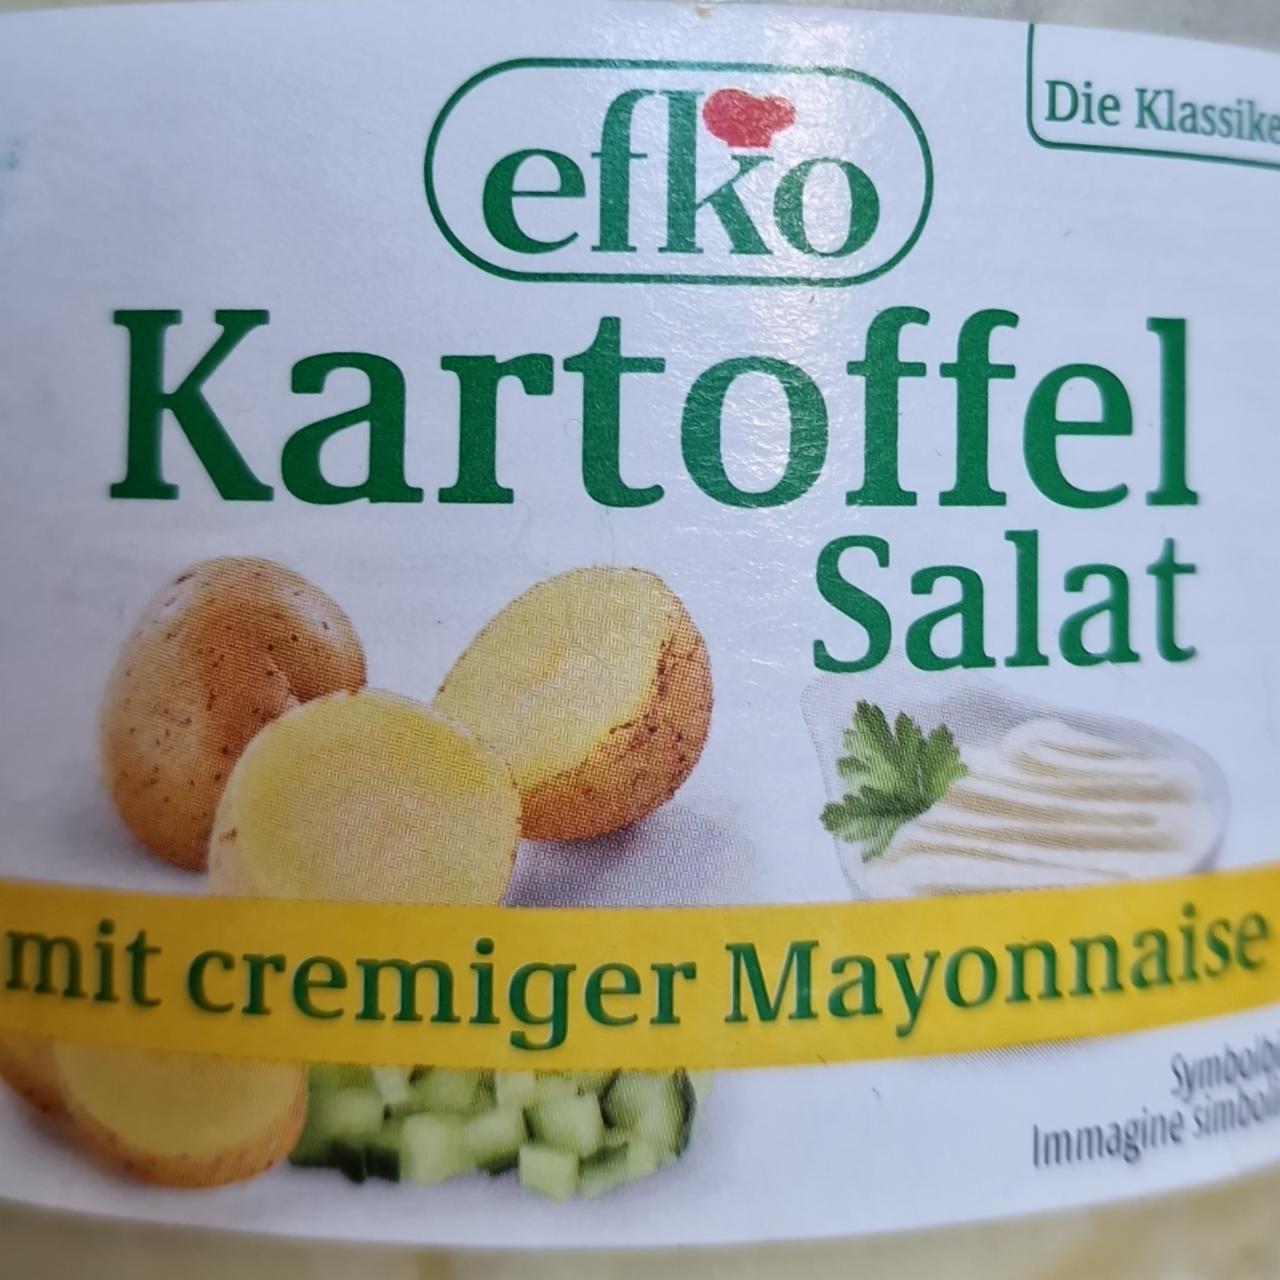 Fotografie - Kartoffel Salat mit cremiger Mayonnaise Efko